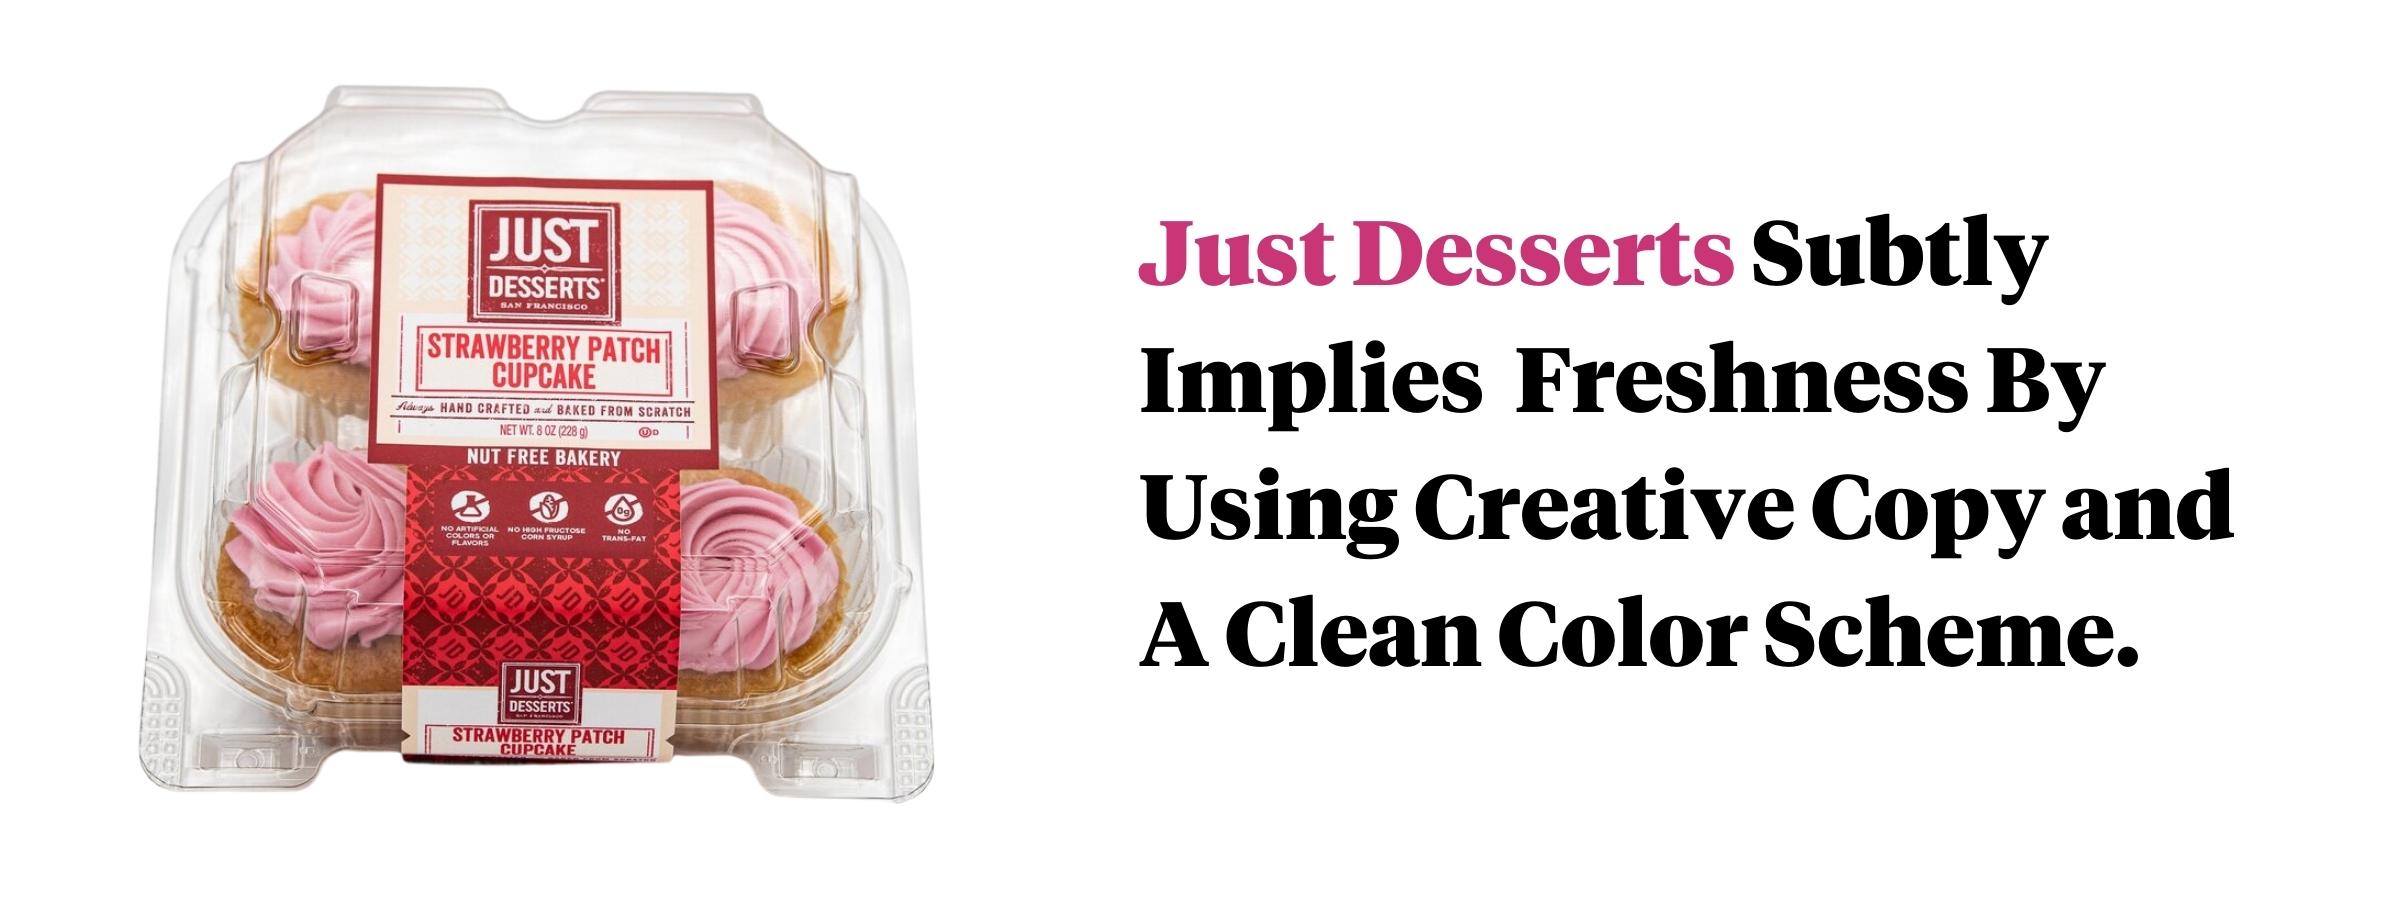 Just Desserts Cupcake Packaging Design